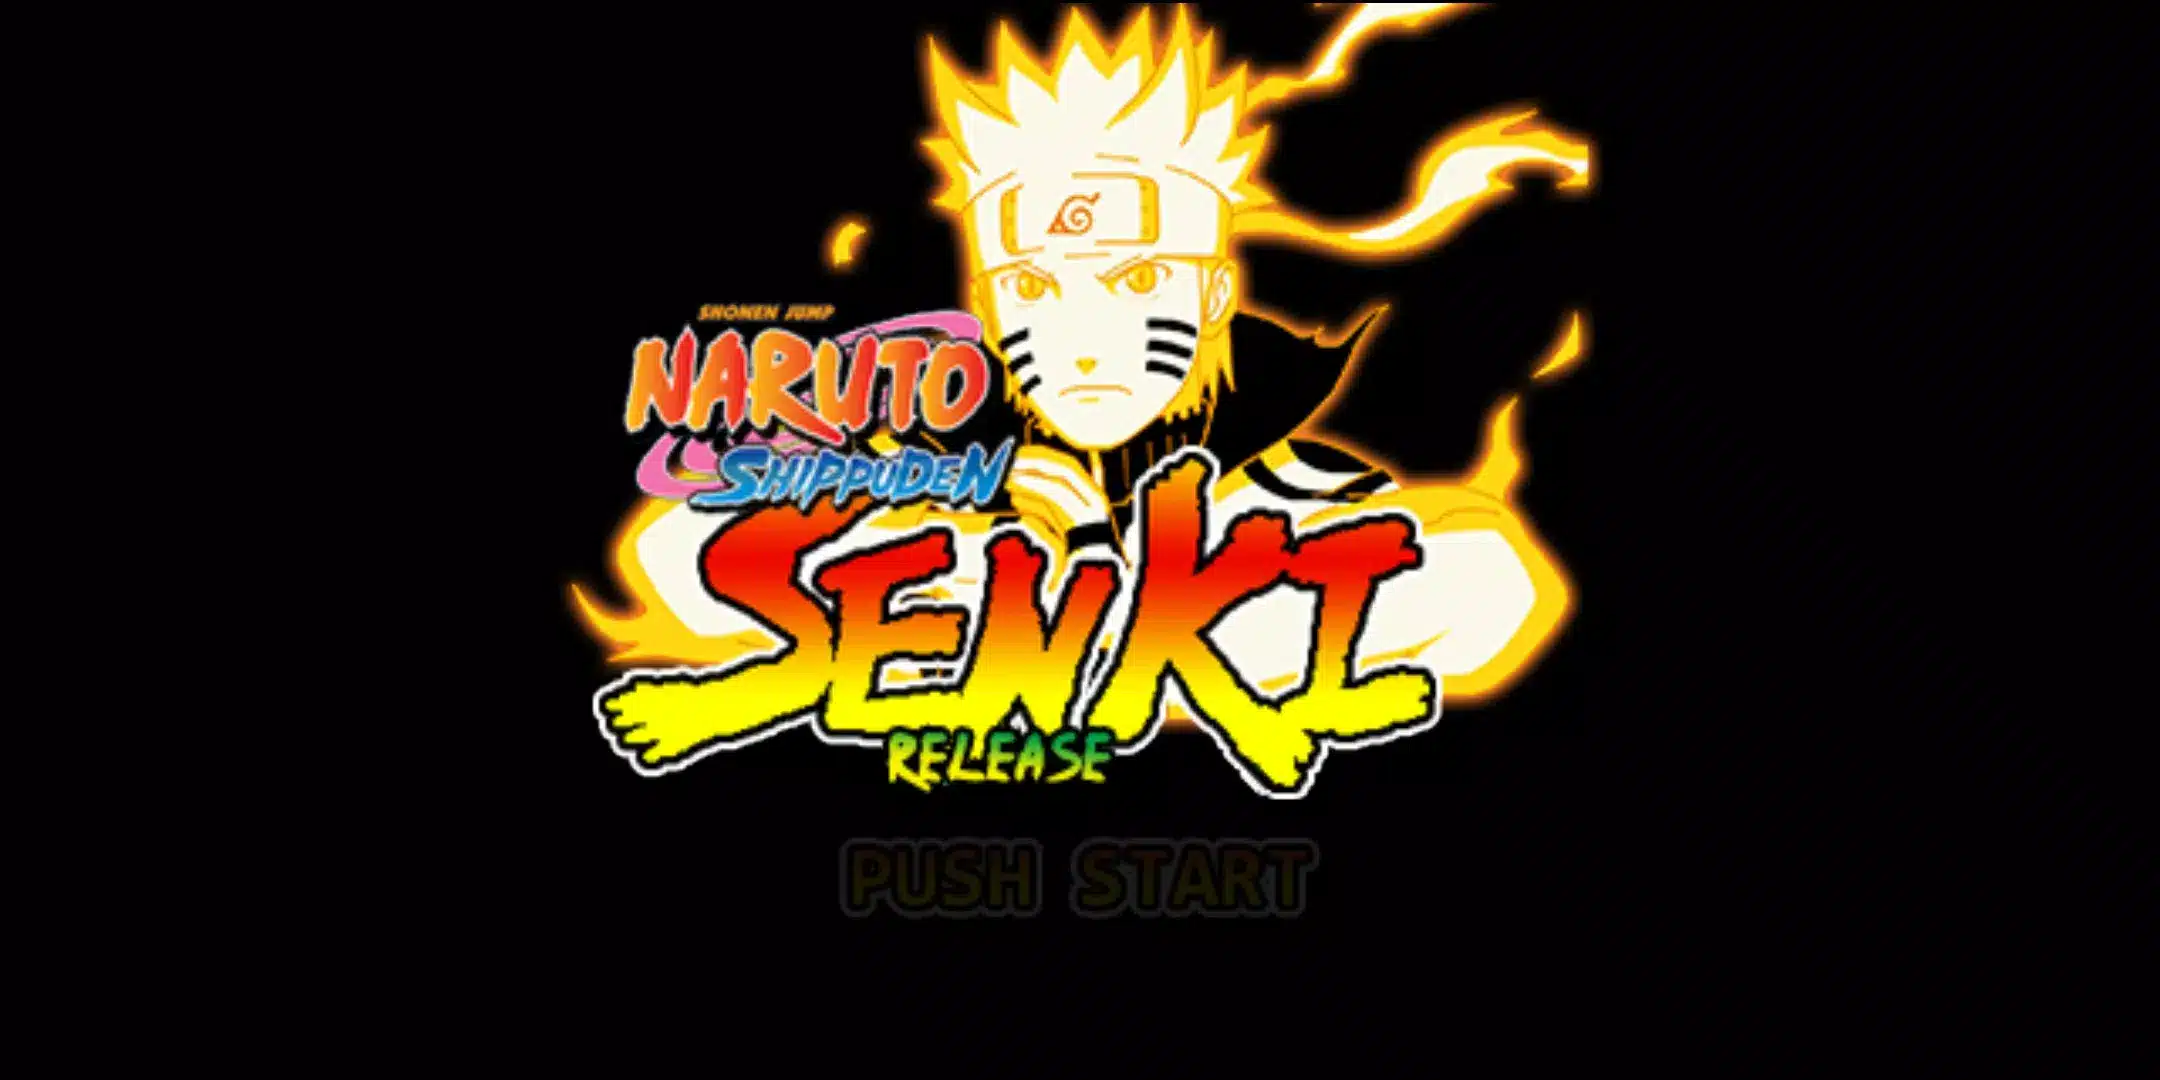 Naruto Senki Image 1